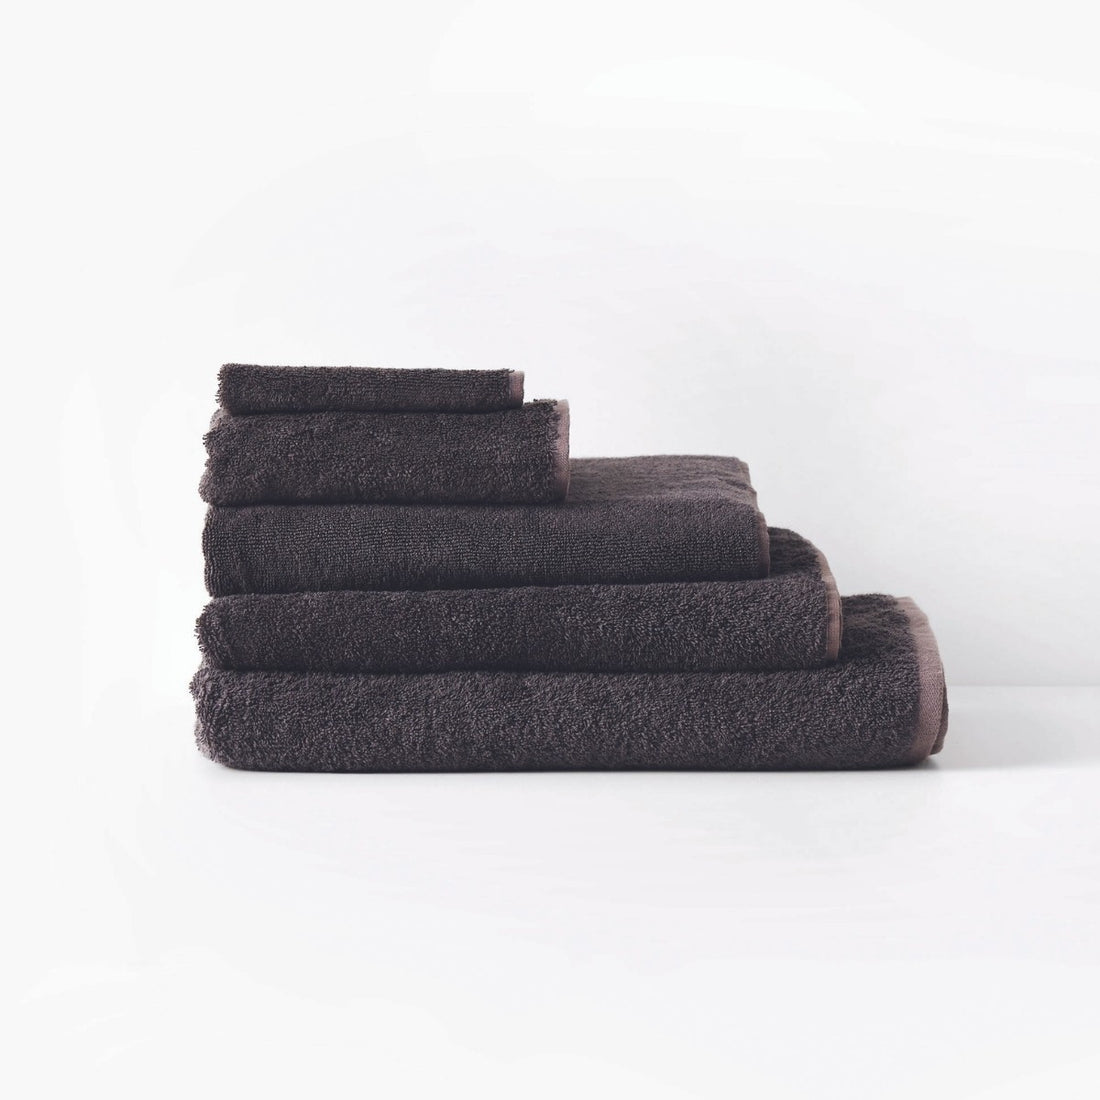 Nara Cotton/Bamboo Charcoal Towel Collection